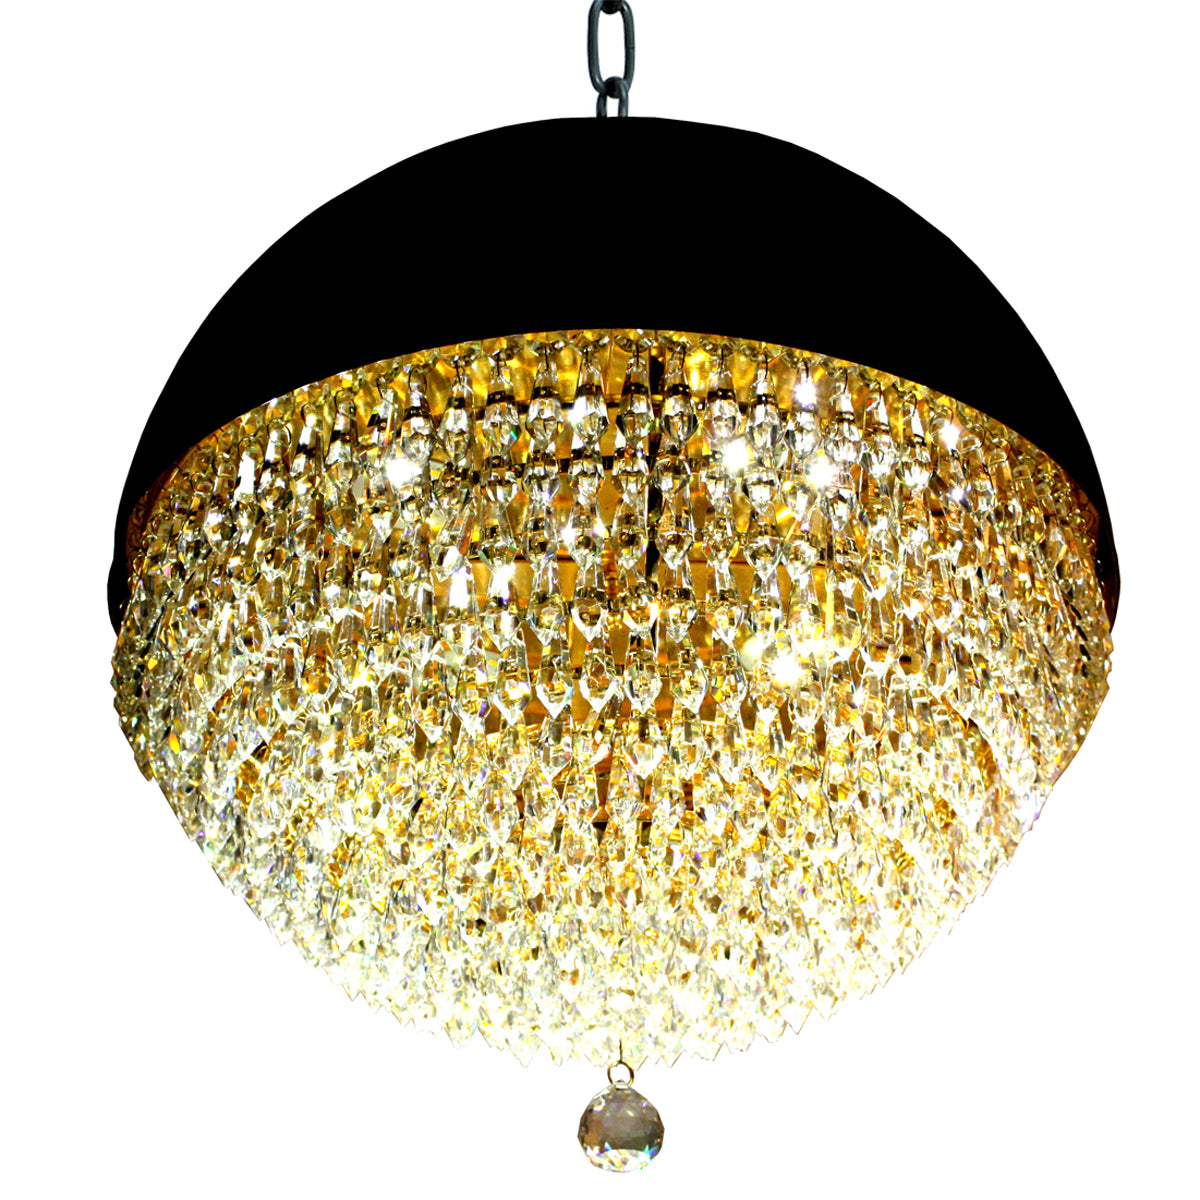 CGC CHARLENE Large Black & Crystal Globe Pendant Light